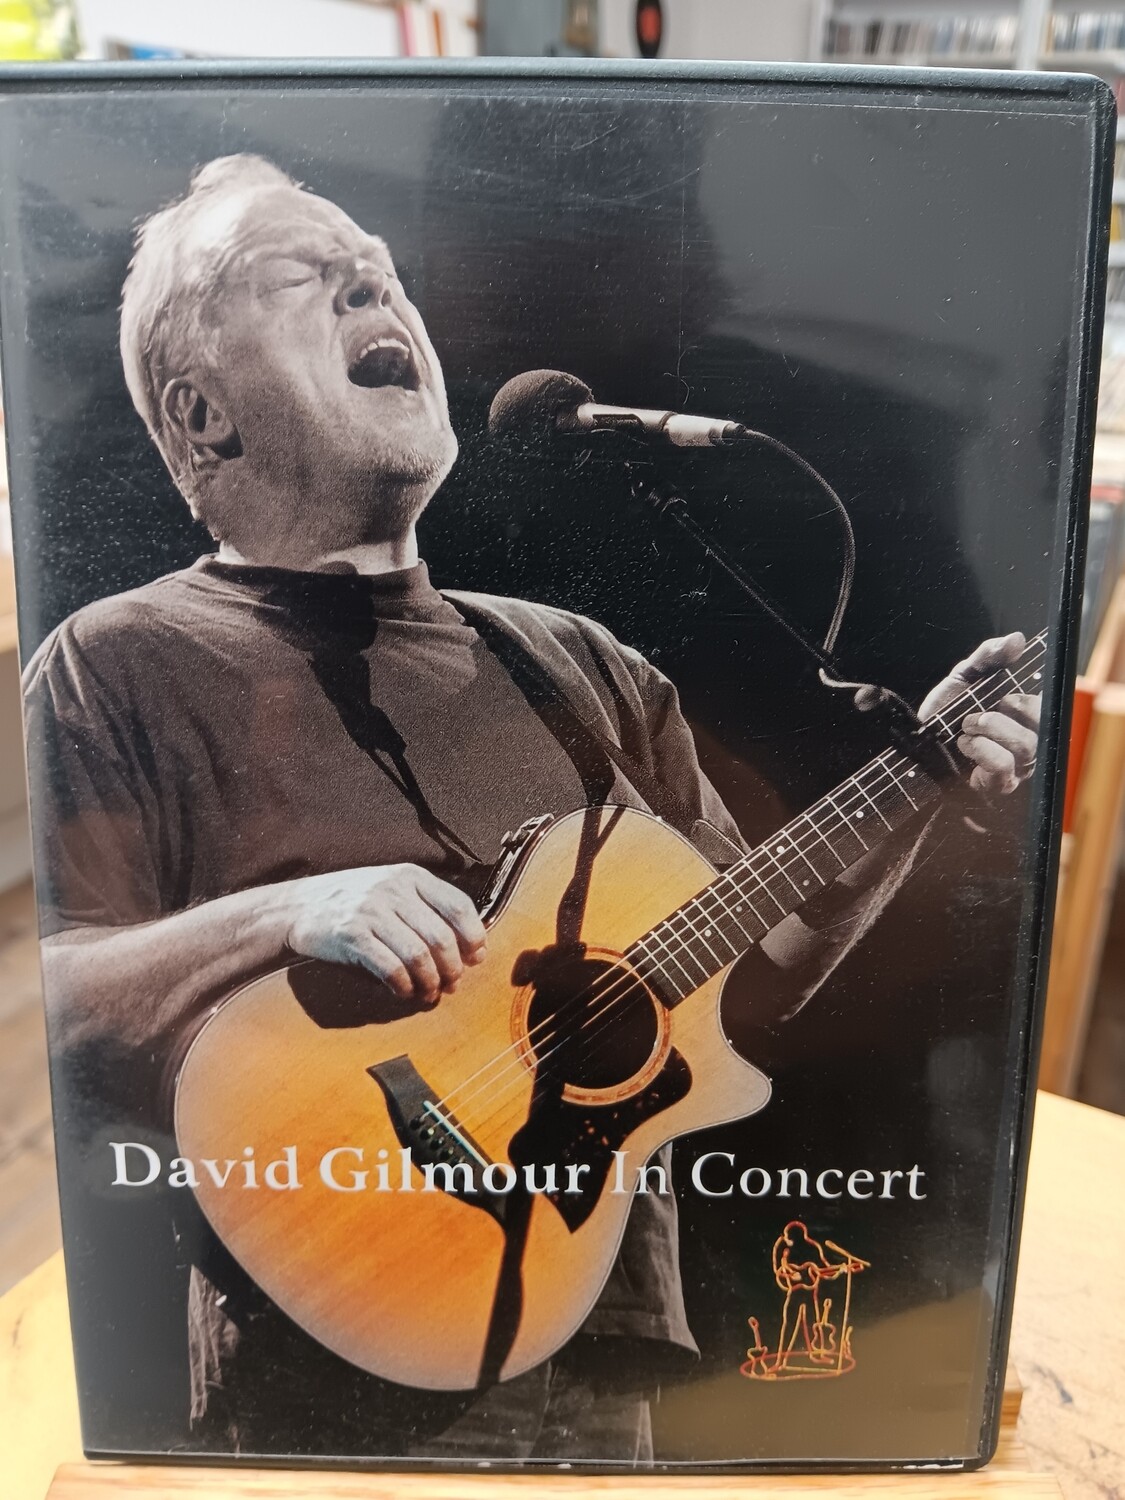 DAVID GILMOUR - David Gilmour in concert (DVD)